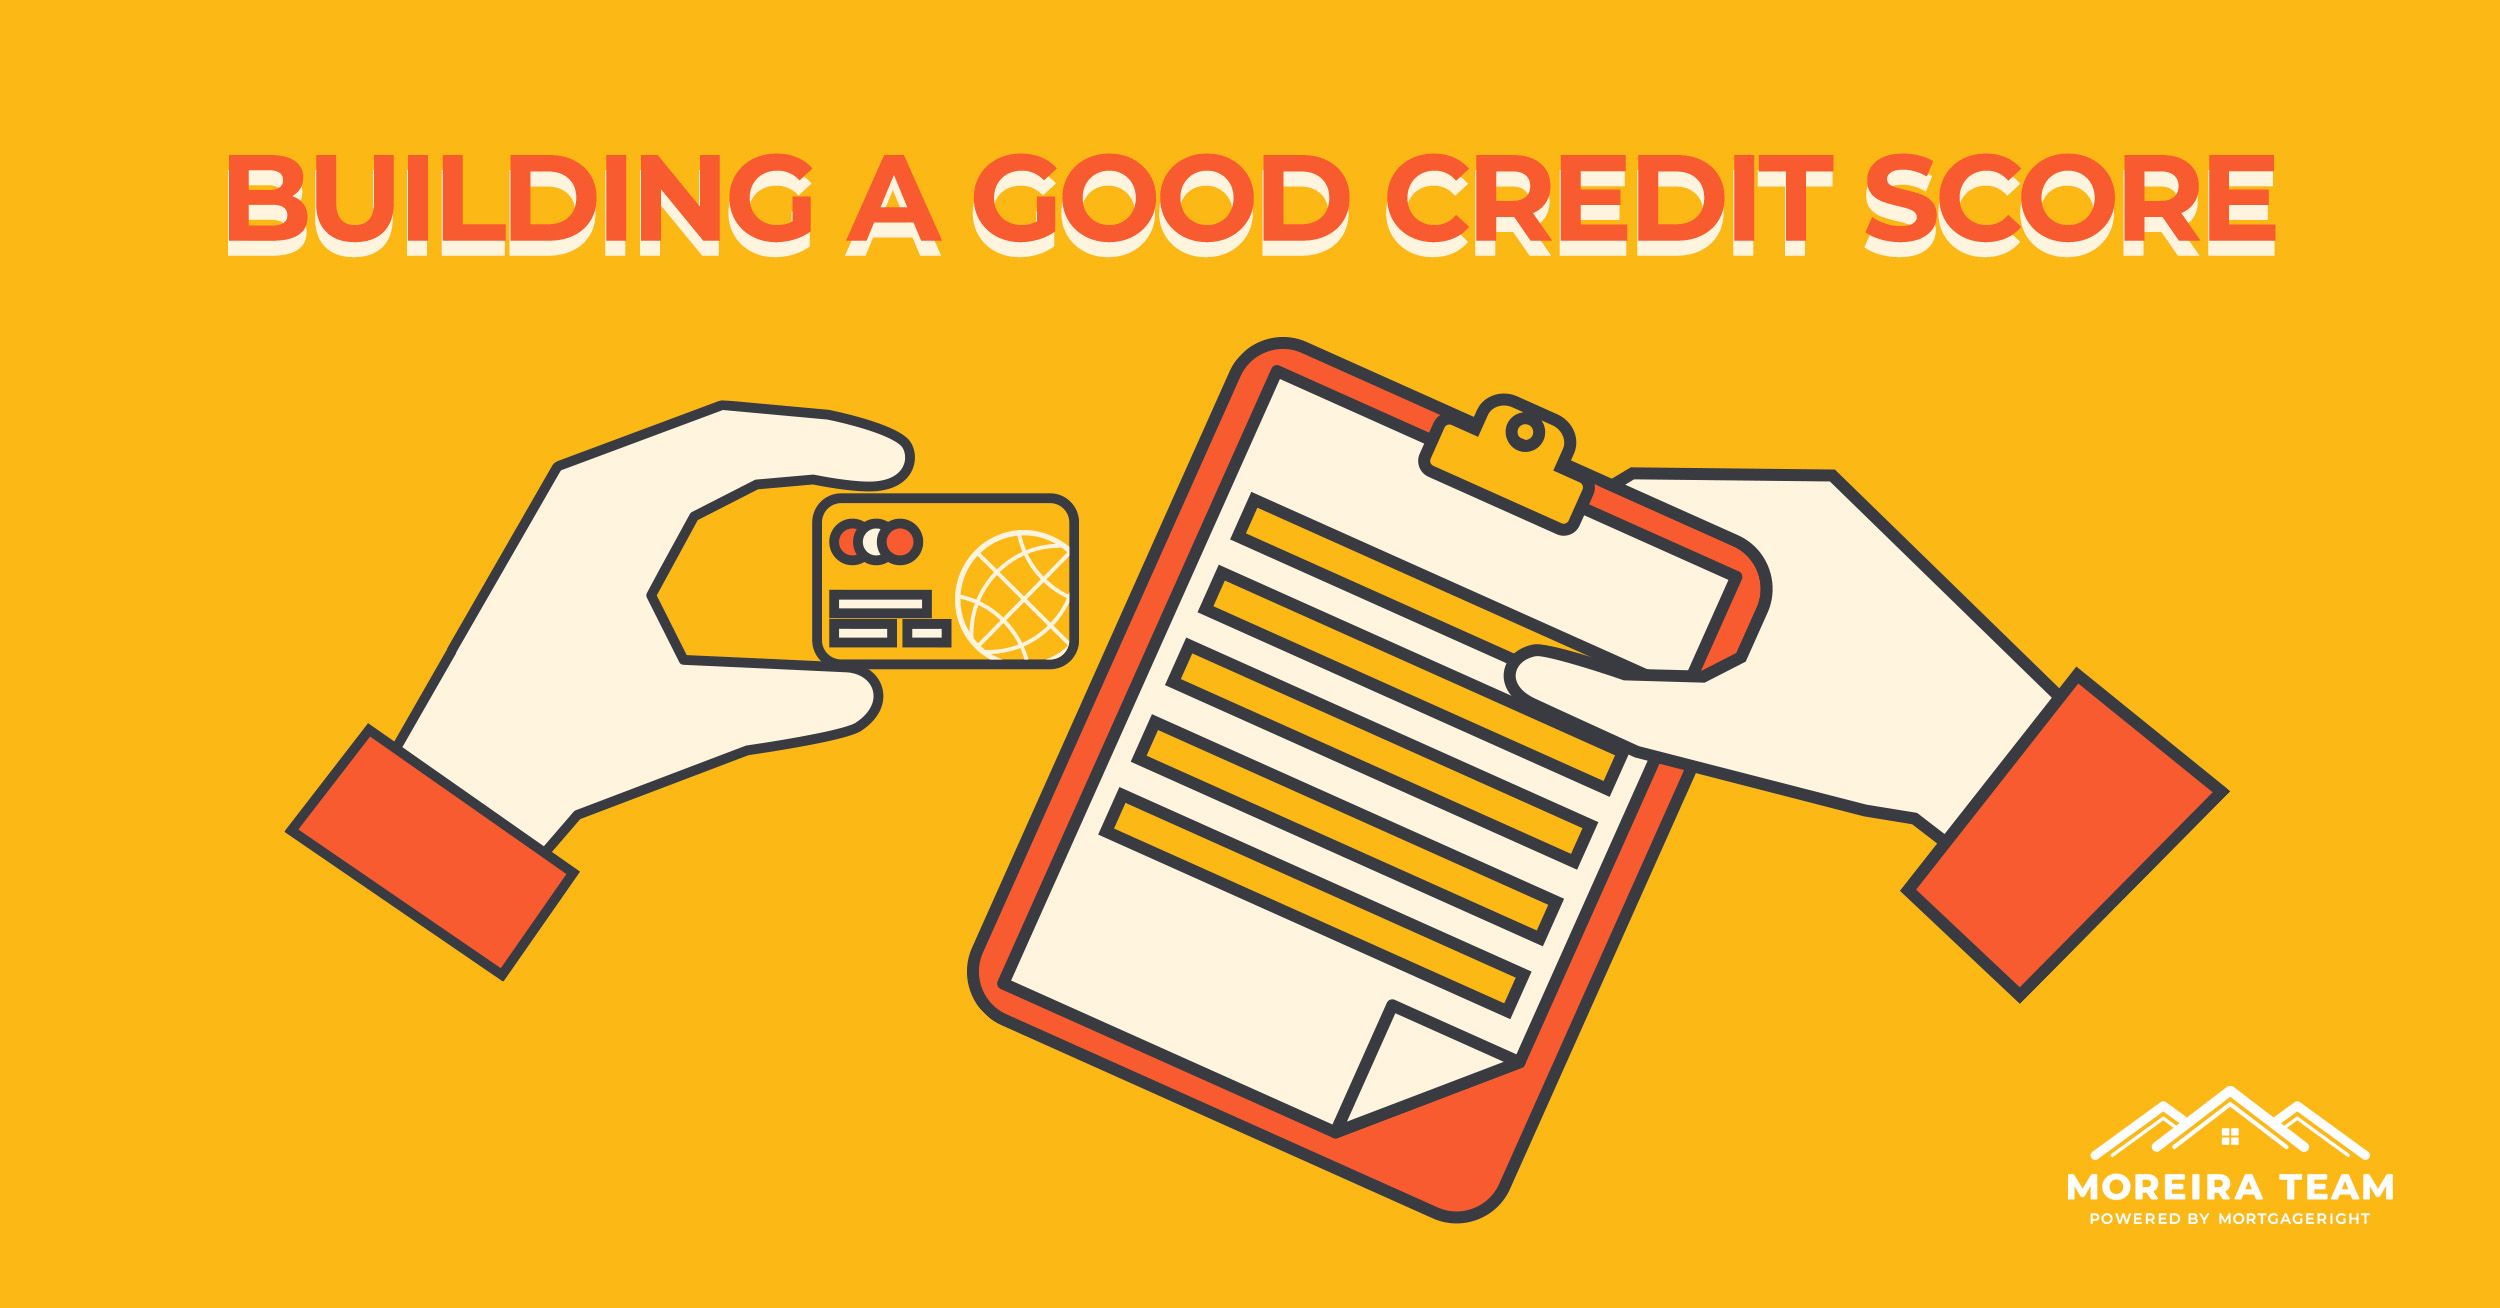 Building a good credit score